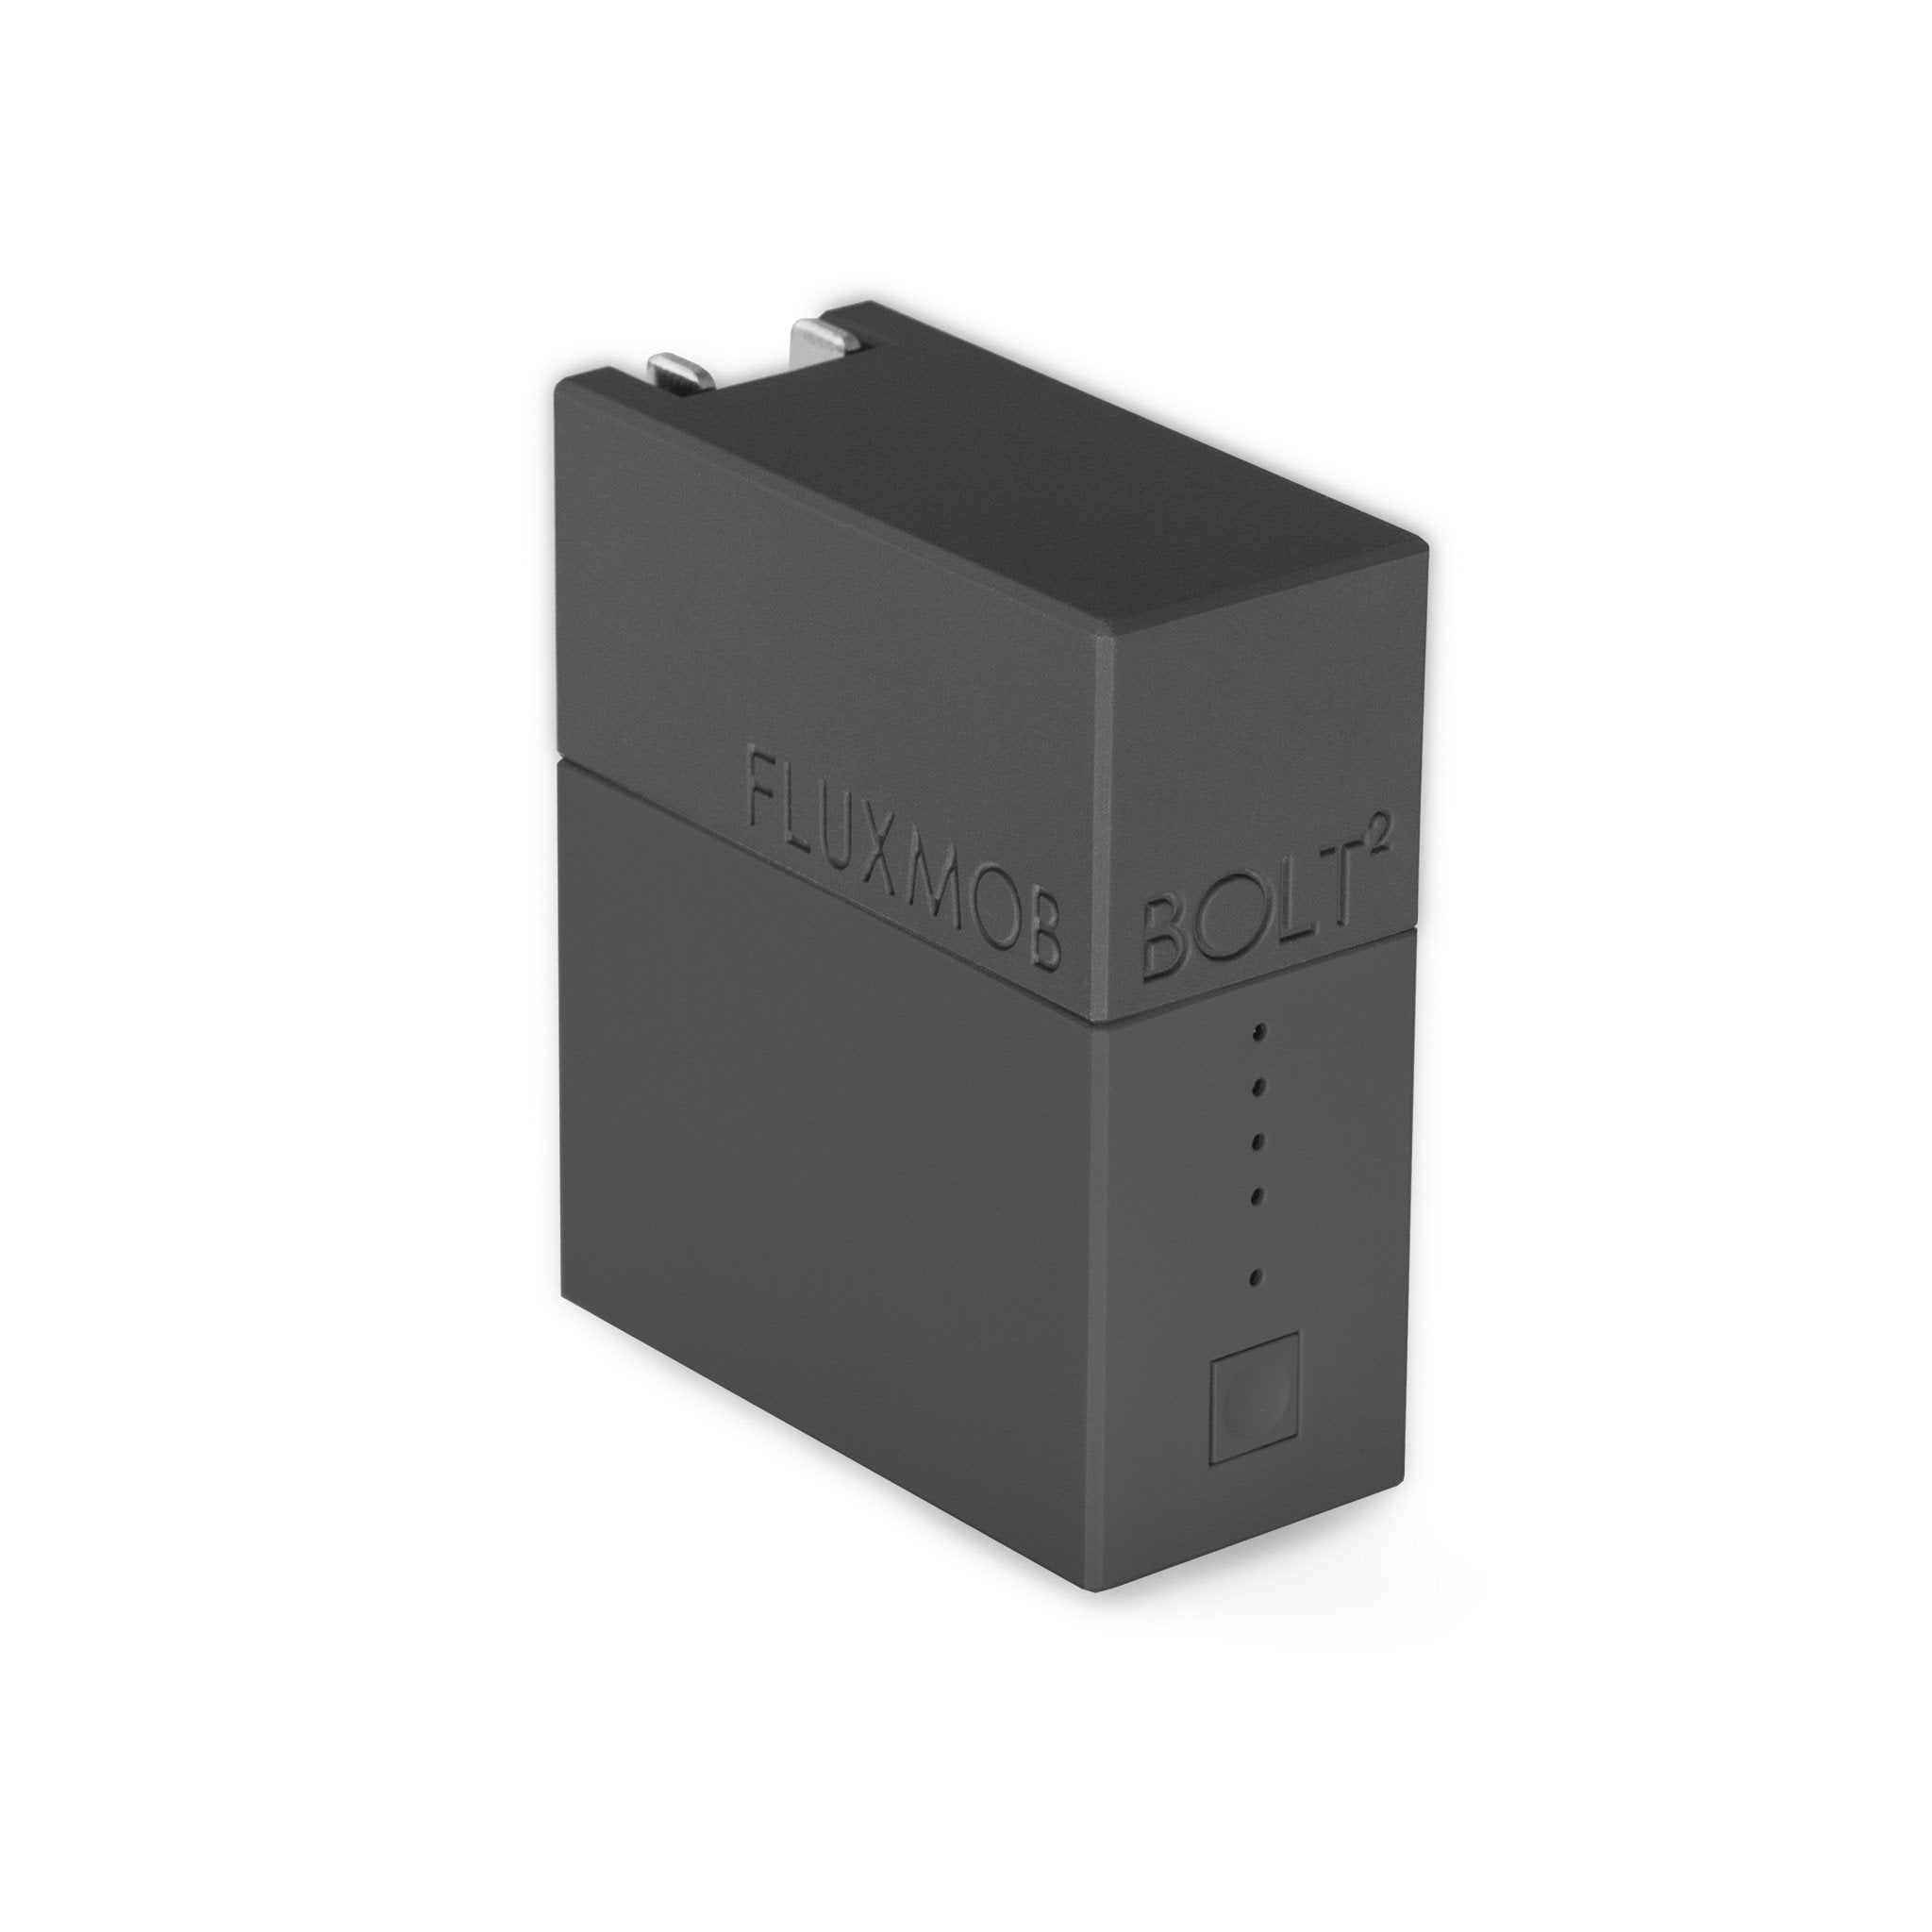 BOLT²: (2) USB Ports, Battery: 6600mAh Lithium Ion